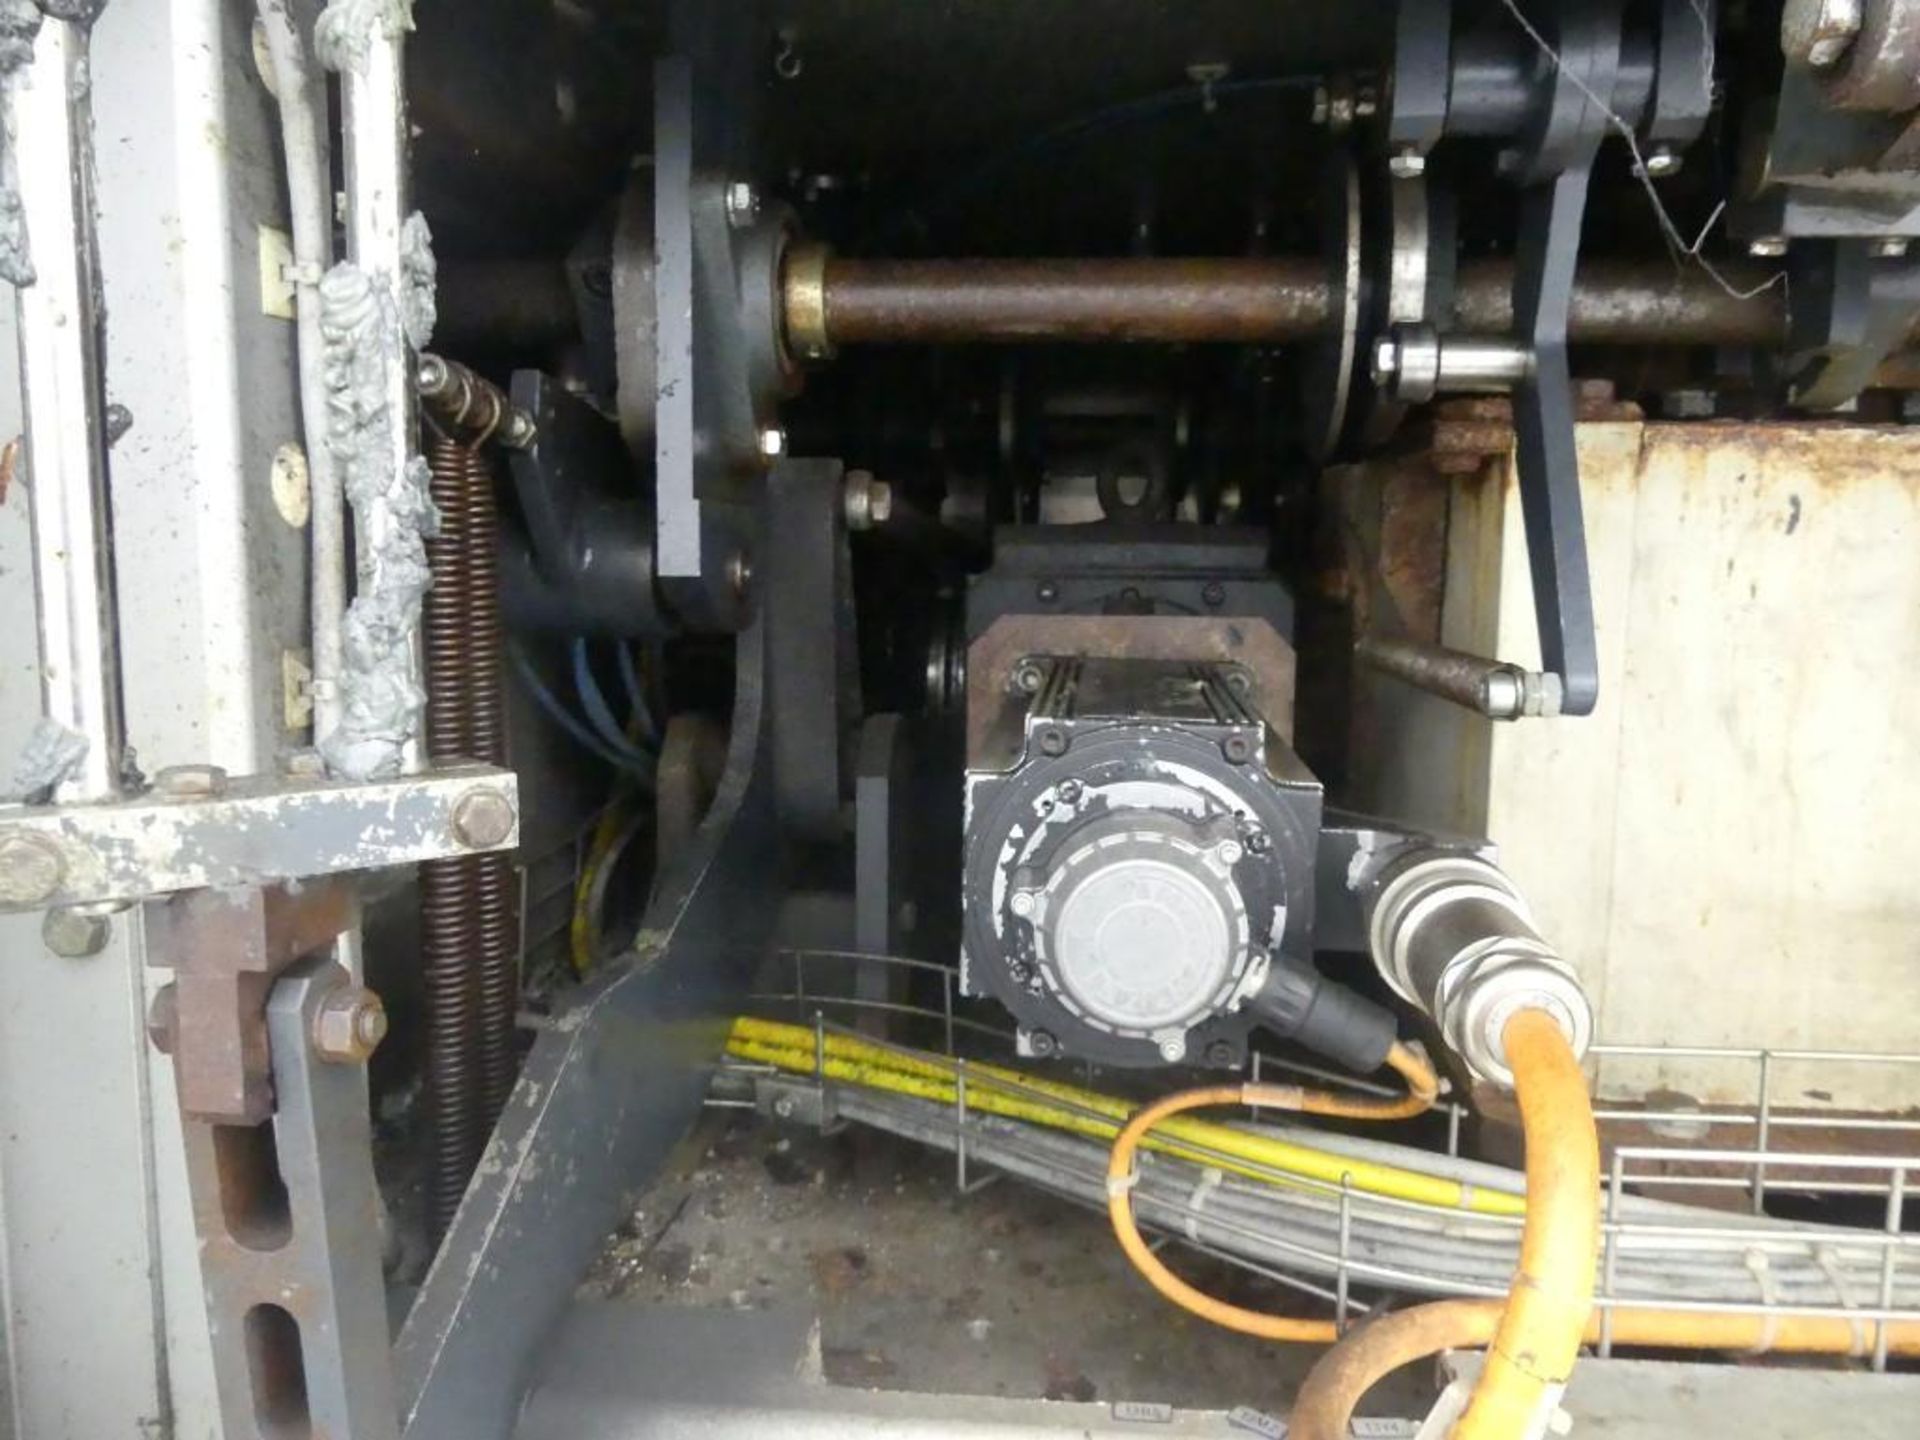 Laudenberg FBL 22 HFFS Pouch Machine with Zipper - Image 26 of 33